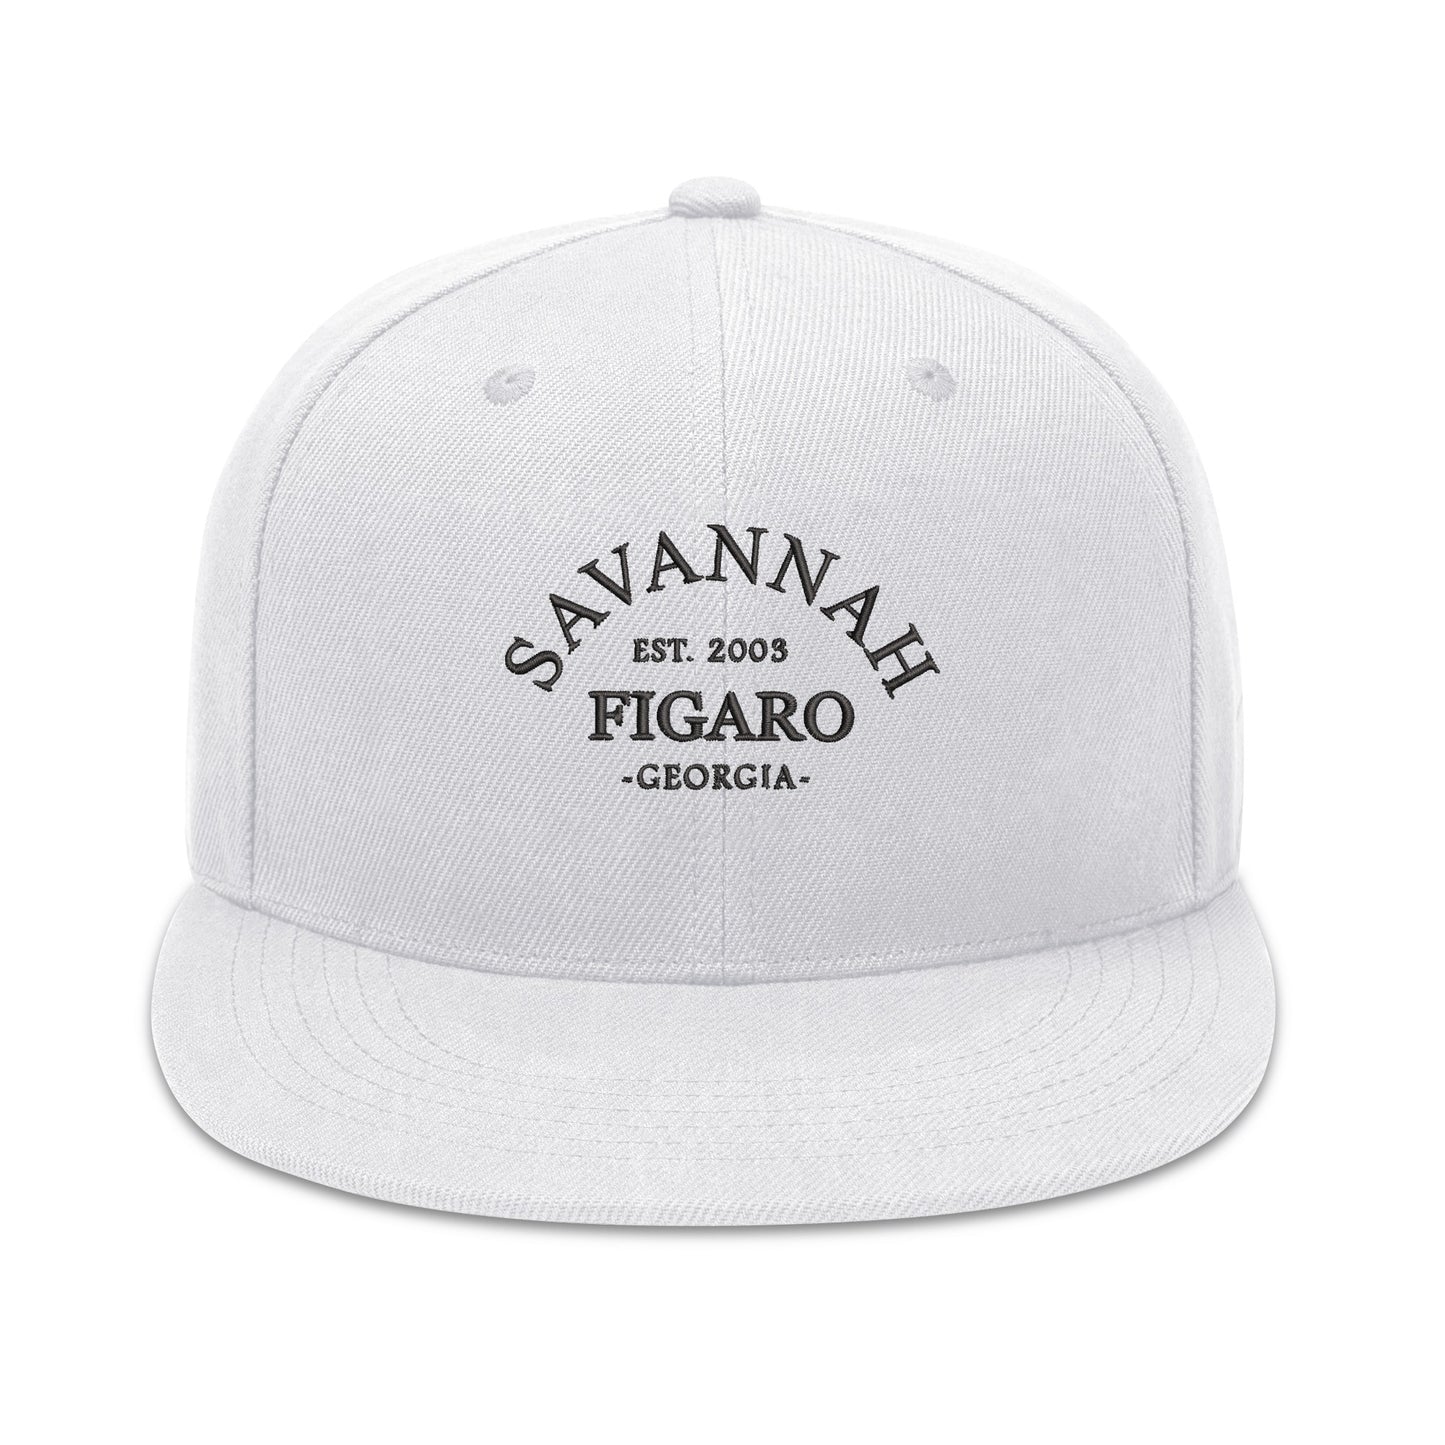 FIGARO Embroidered SAV Hat